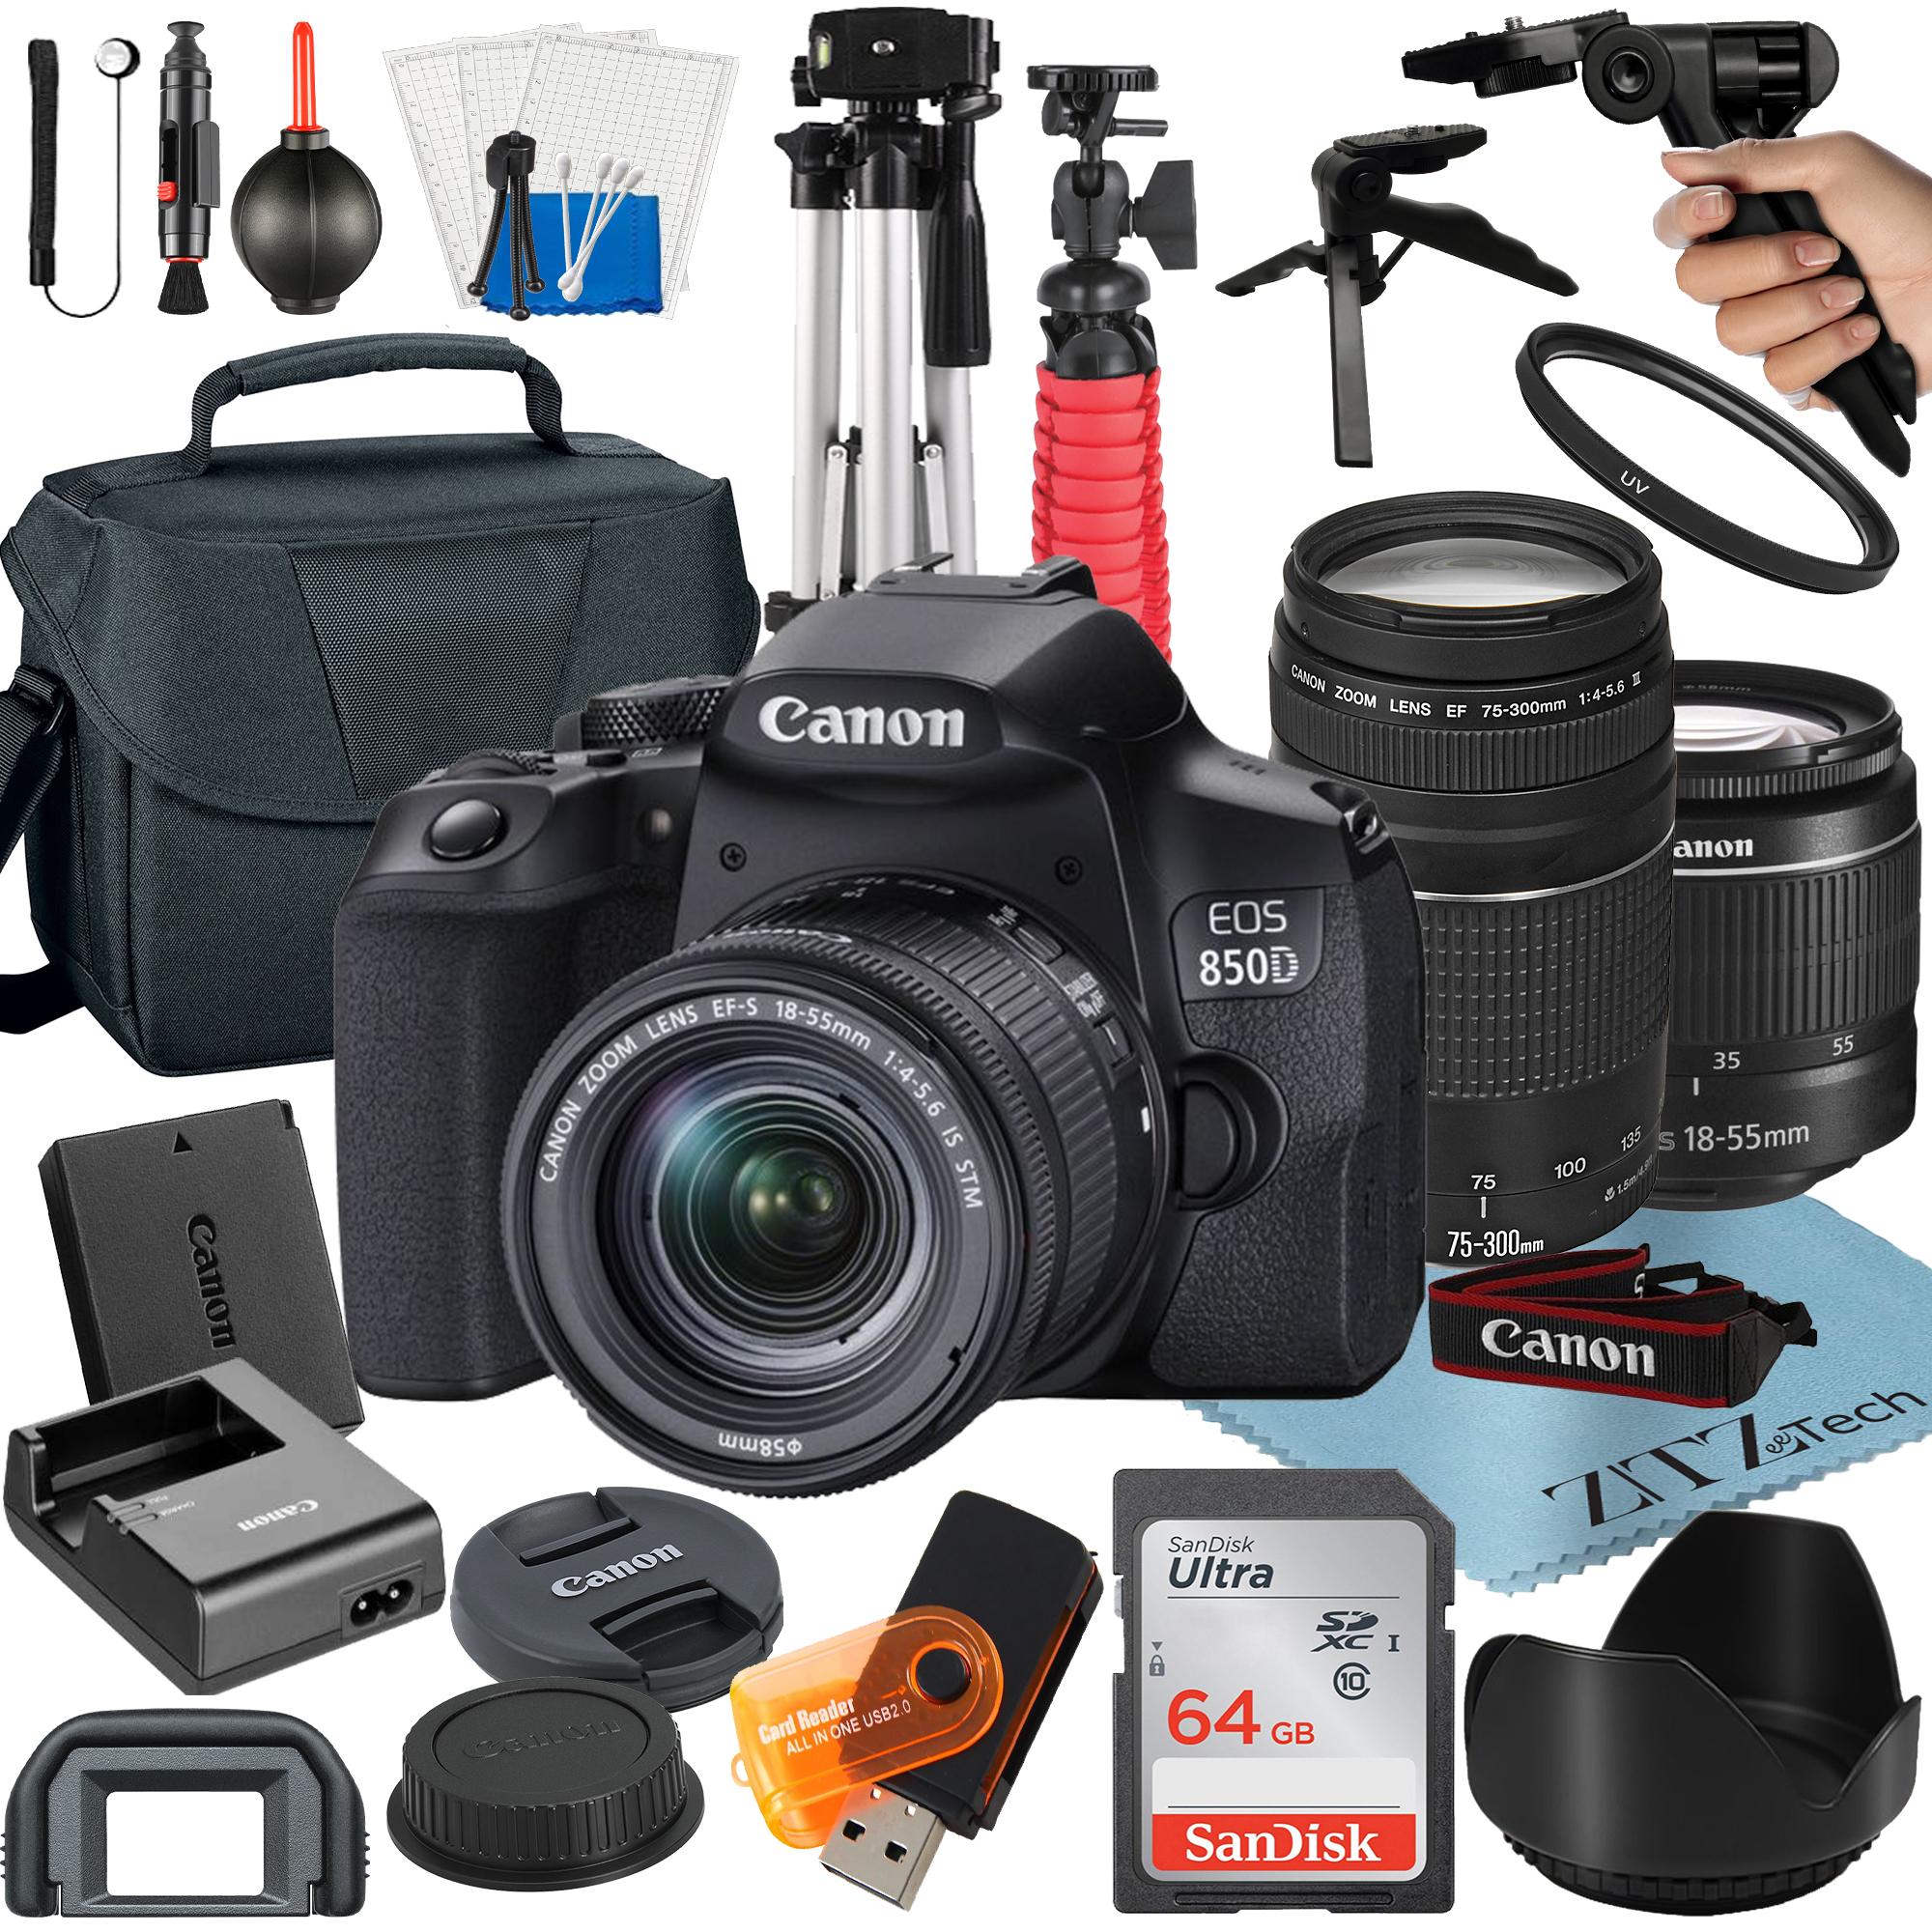 Canon EOS 850D / Rebel T8i DSLR Camera Bundle with 18-55mm + 75-300mm Lens + 64GB SanDisk Card + Case + Tripod + ZeeTech Accessory